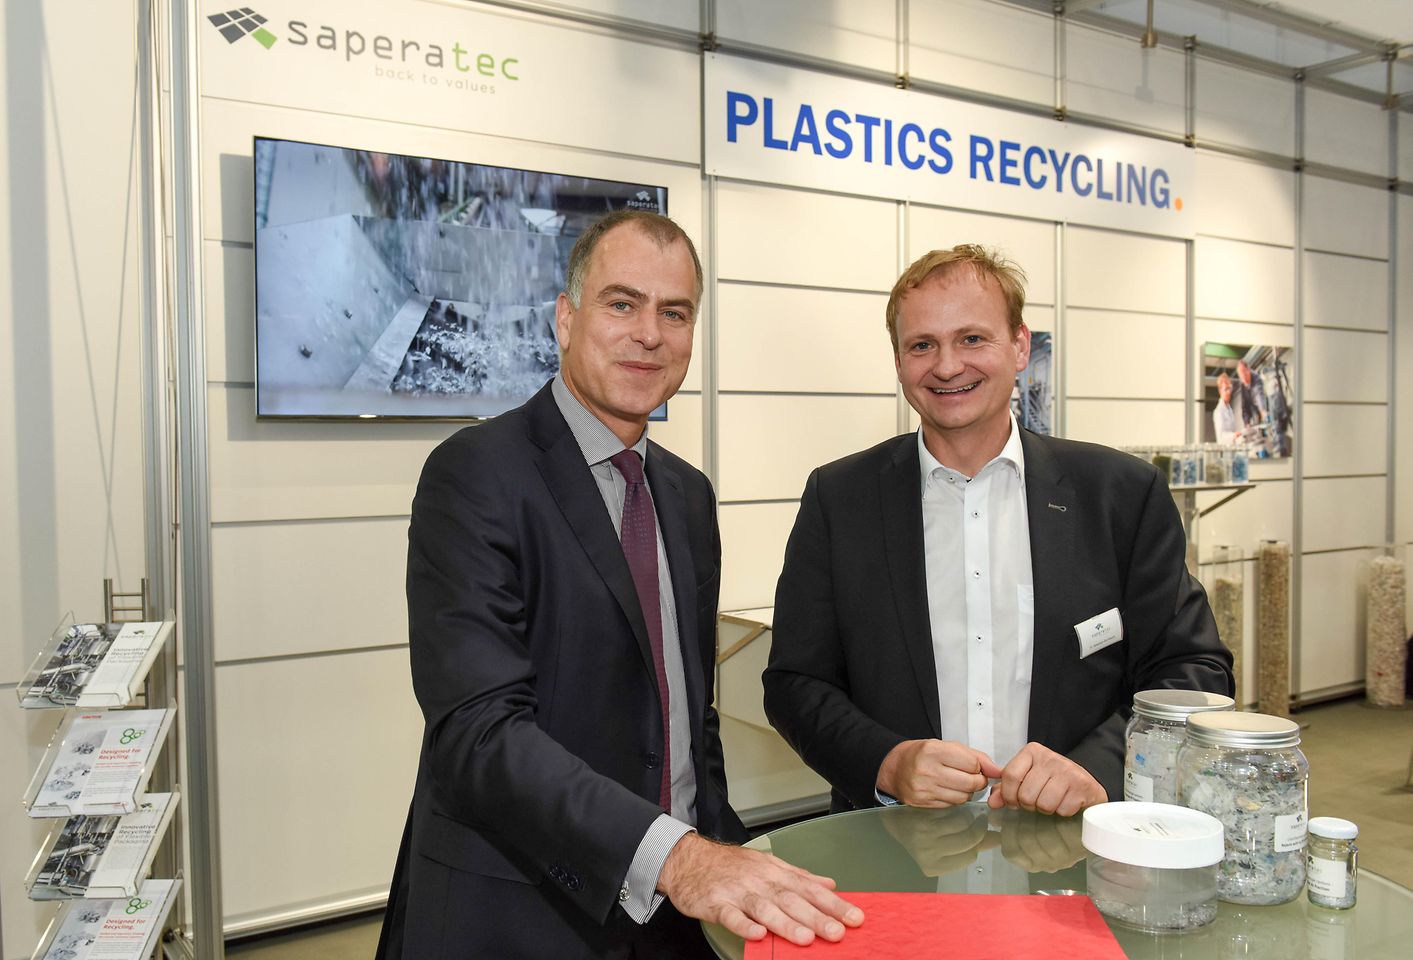 Jan-Dirk Auris, Executive Vice President Adhesive Technologies, met with Saperatec GmbH founder and CEO Dr. Sebastian Kernbaum at K2019 in Düsseldorf.